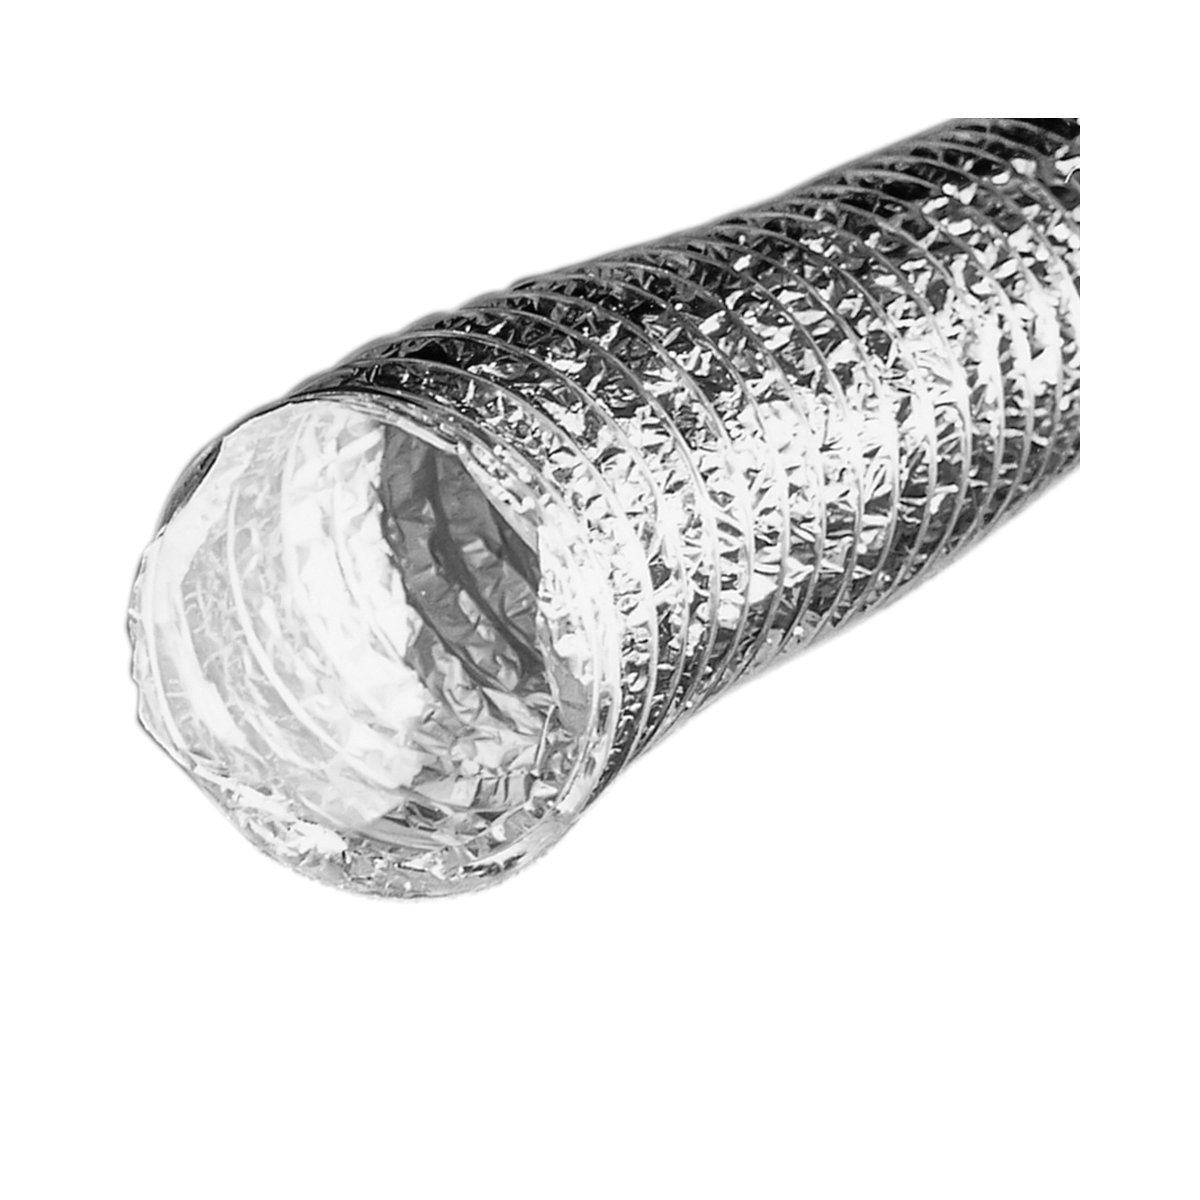 Builders Best® 110216 Foil Duct, 50 ft L, 6 in-WG Pressure, Aluminum, Silver